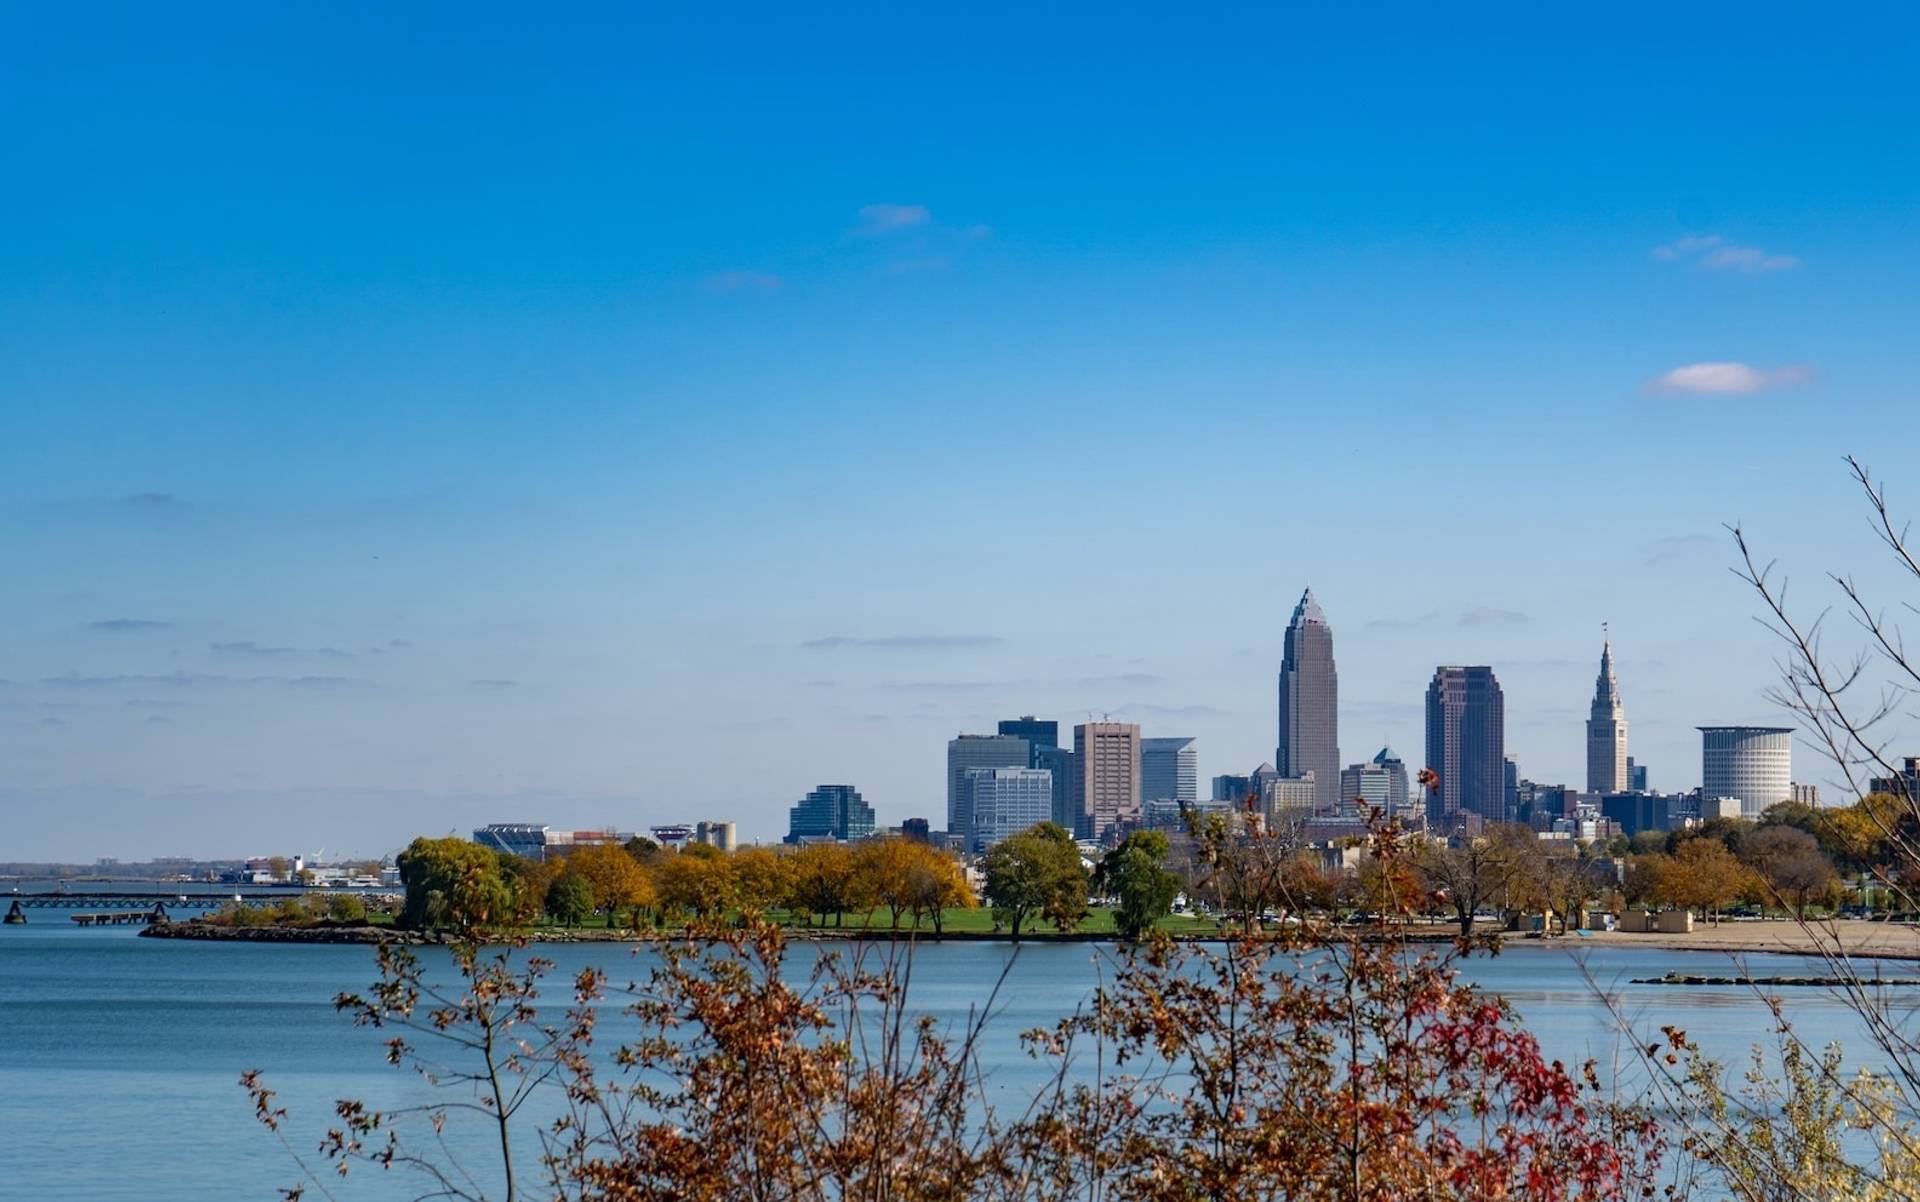 Cleveland skyline to represent where to buy e-bikes in Ohio